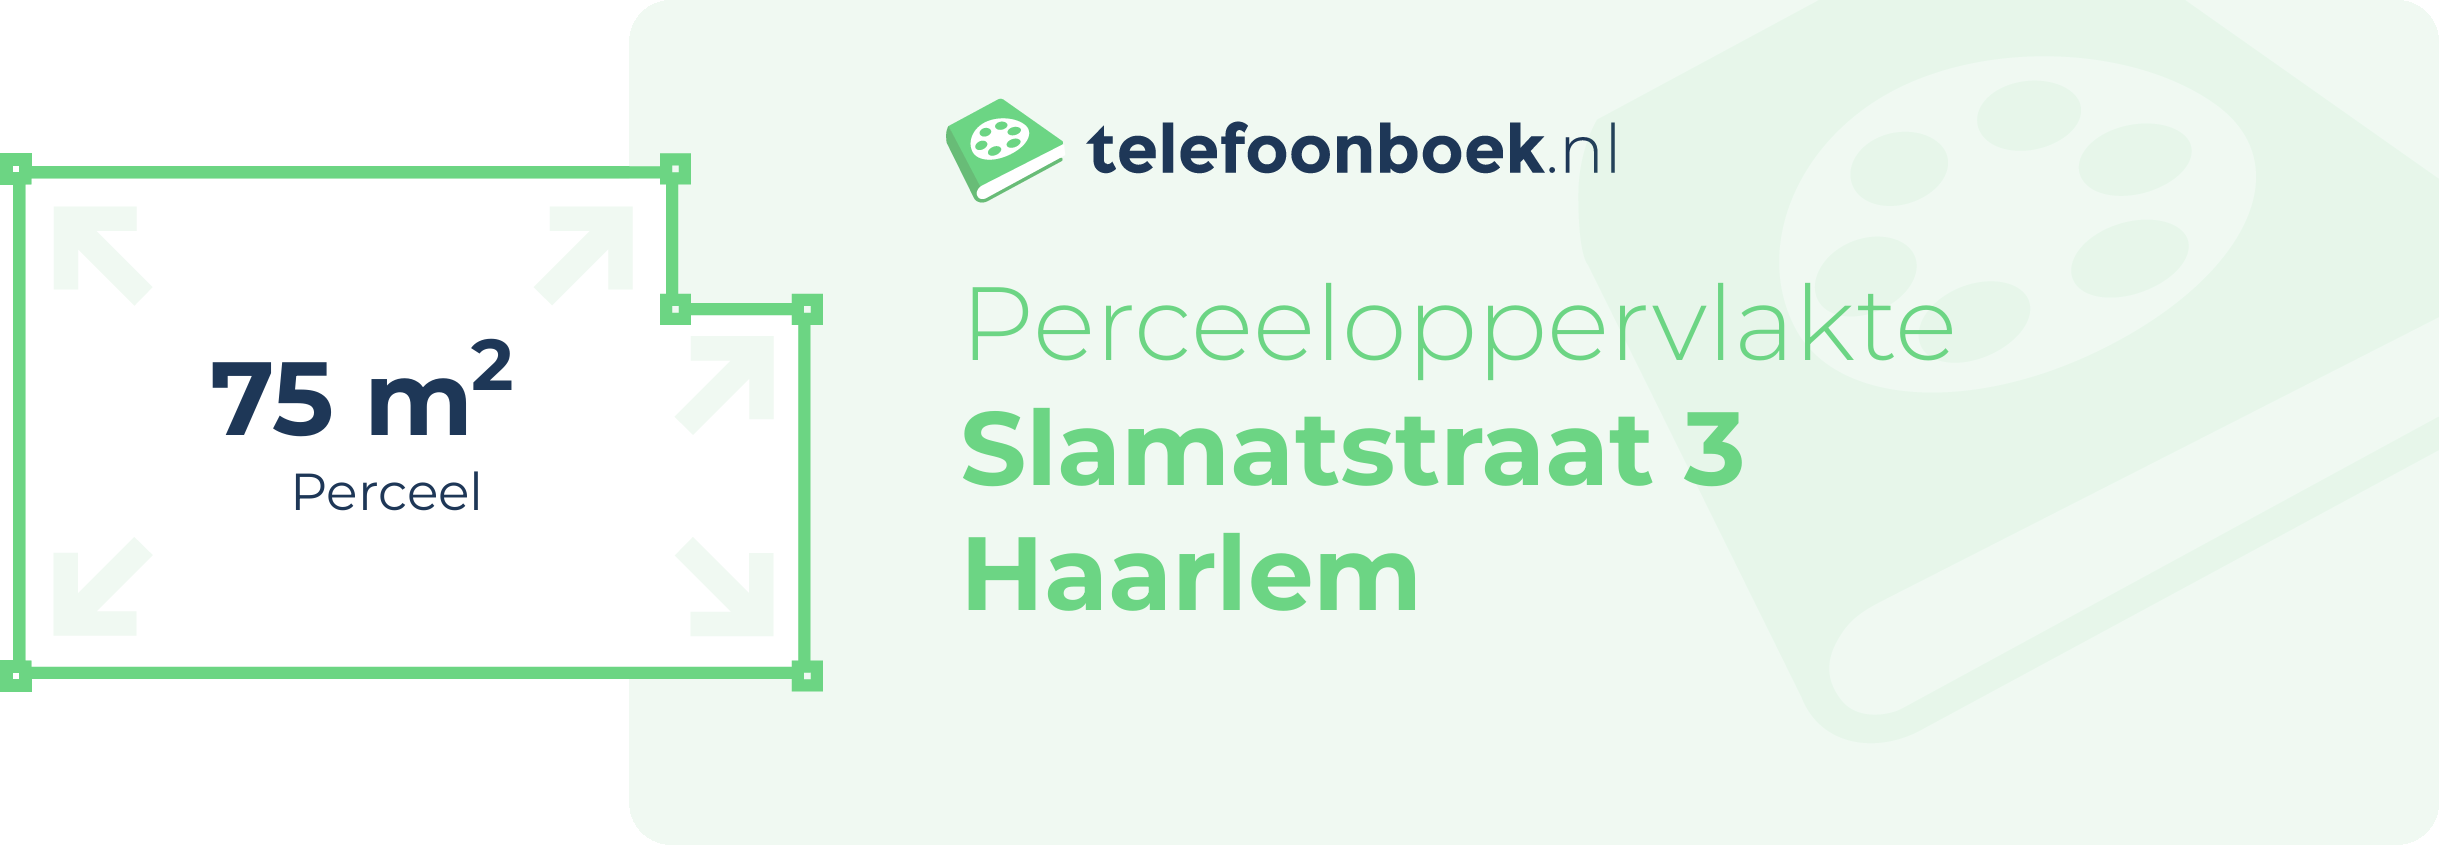 Perceeloppervlakte Slamatstraat 3 Haarlem